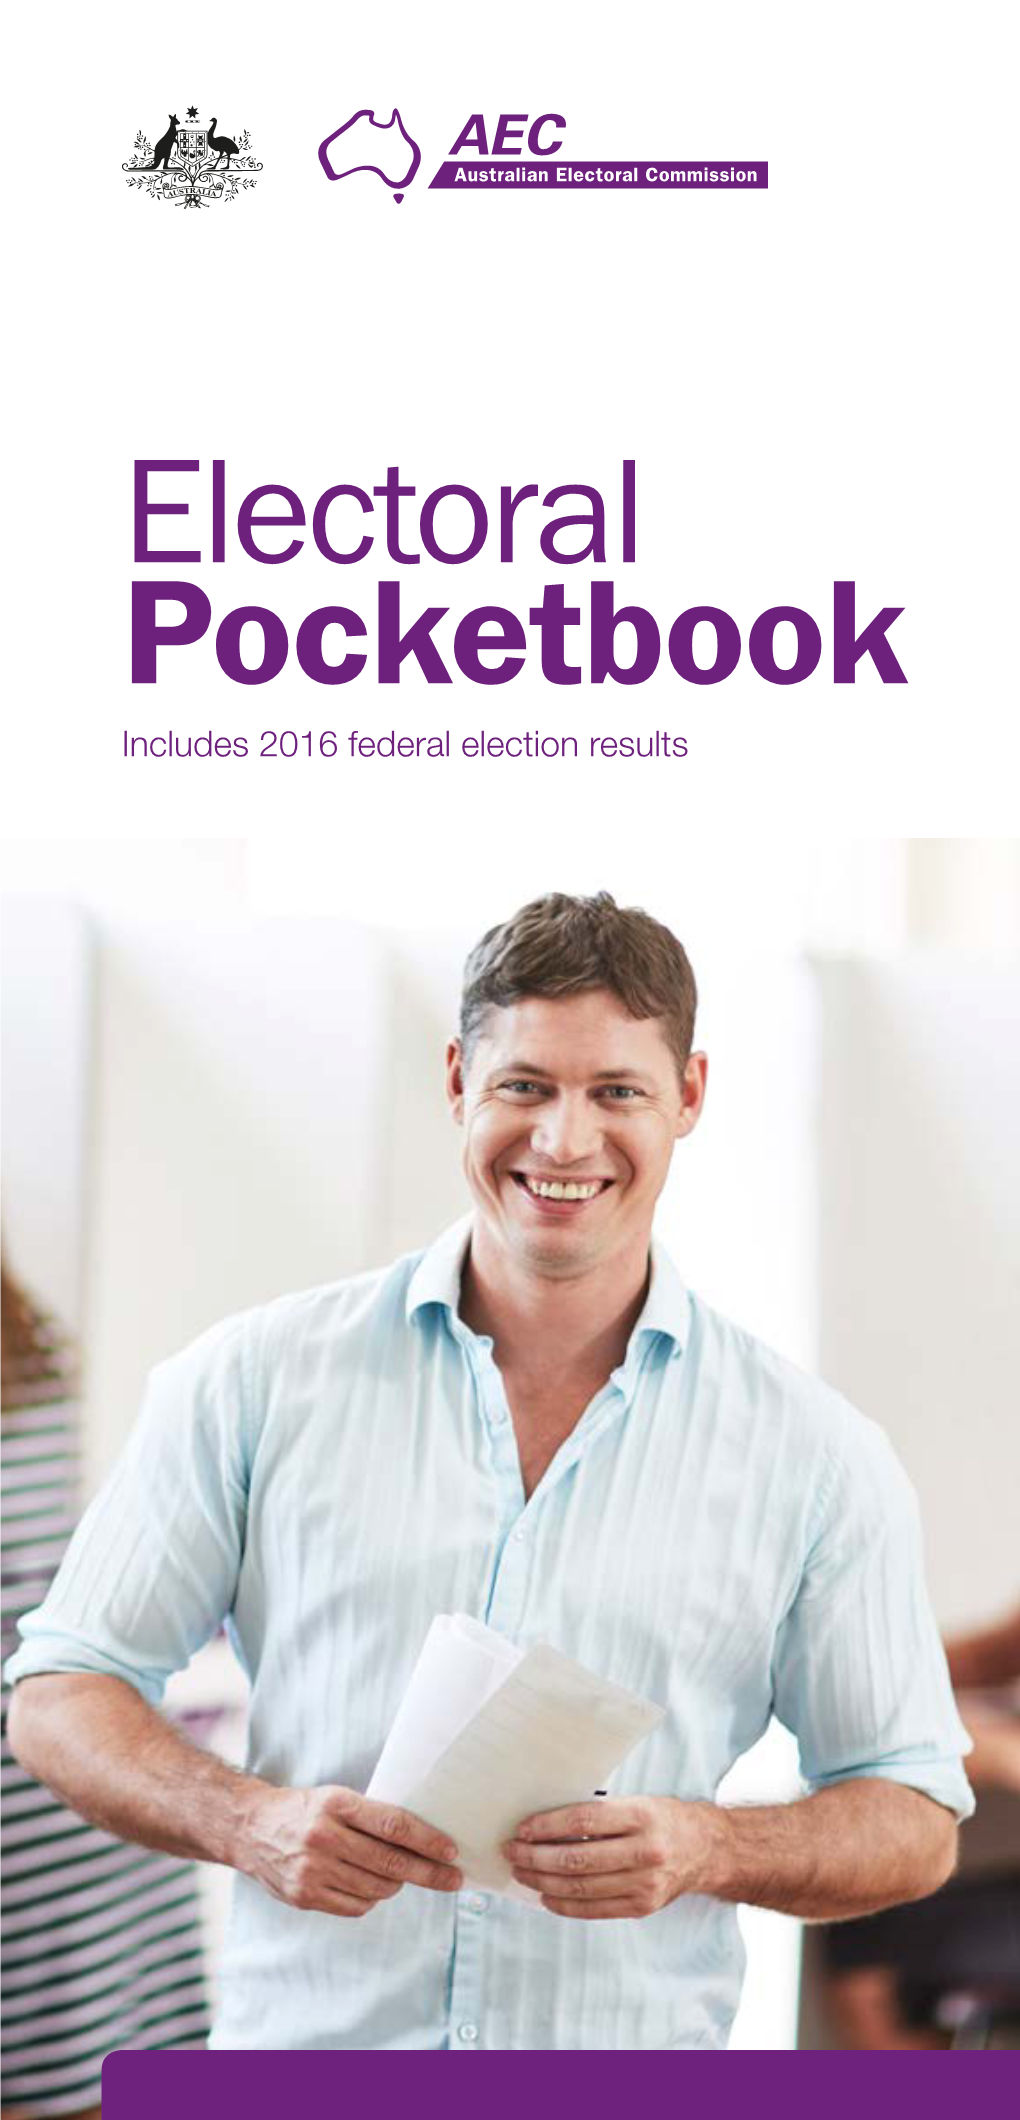 Electoral Pocketbook Includes 2016 Federal Election Results